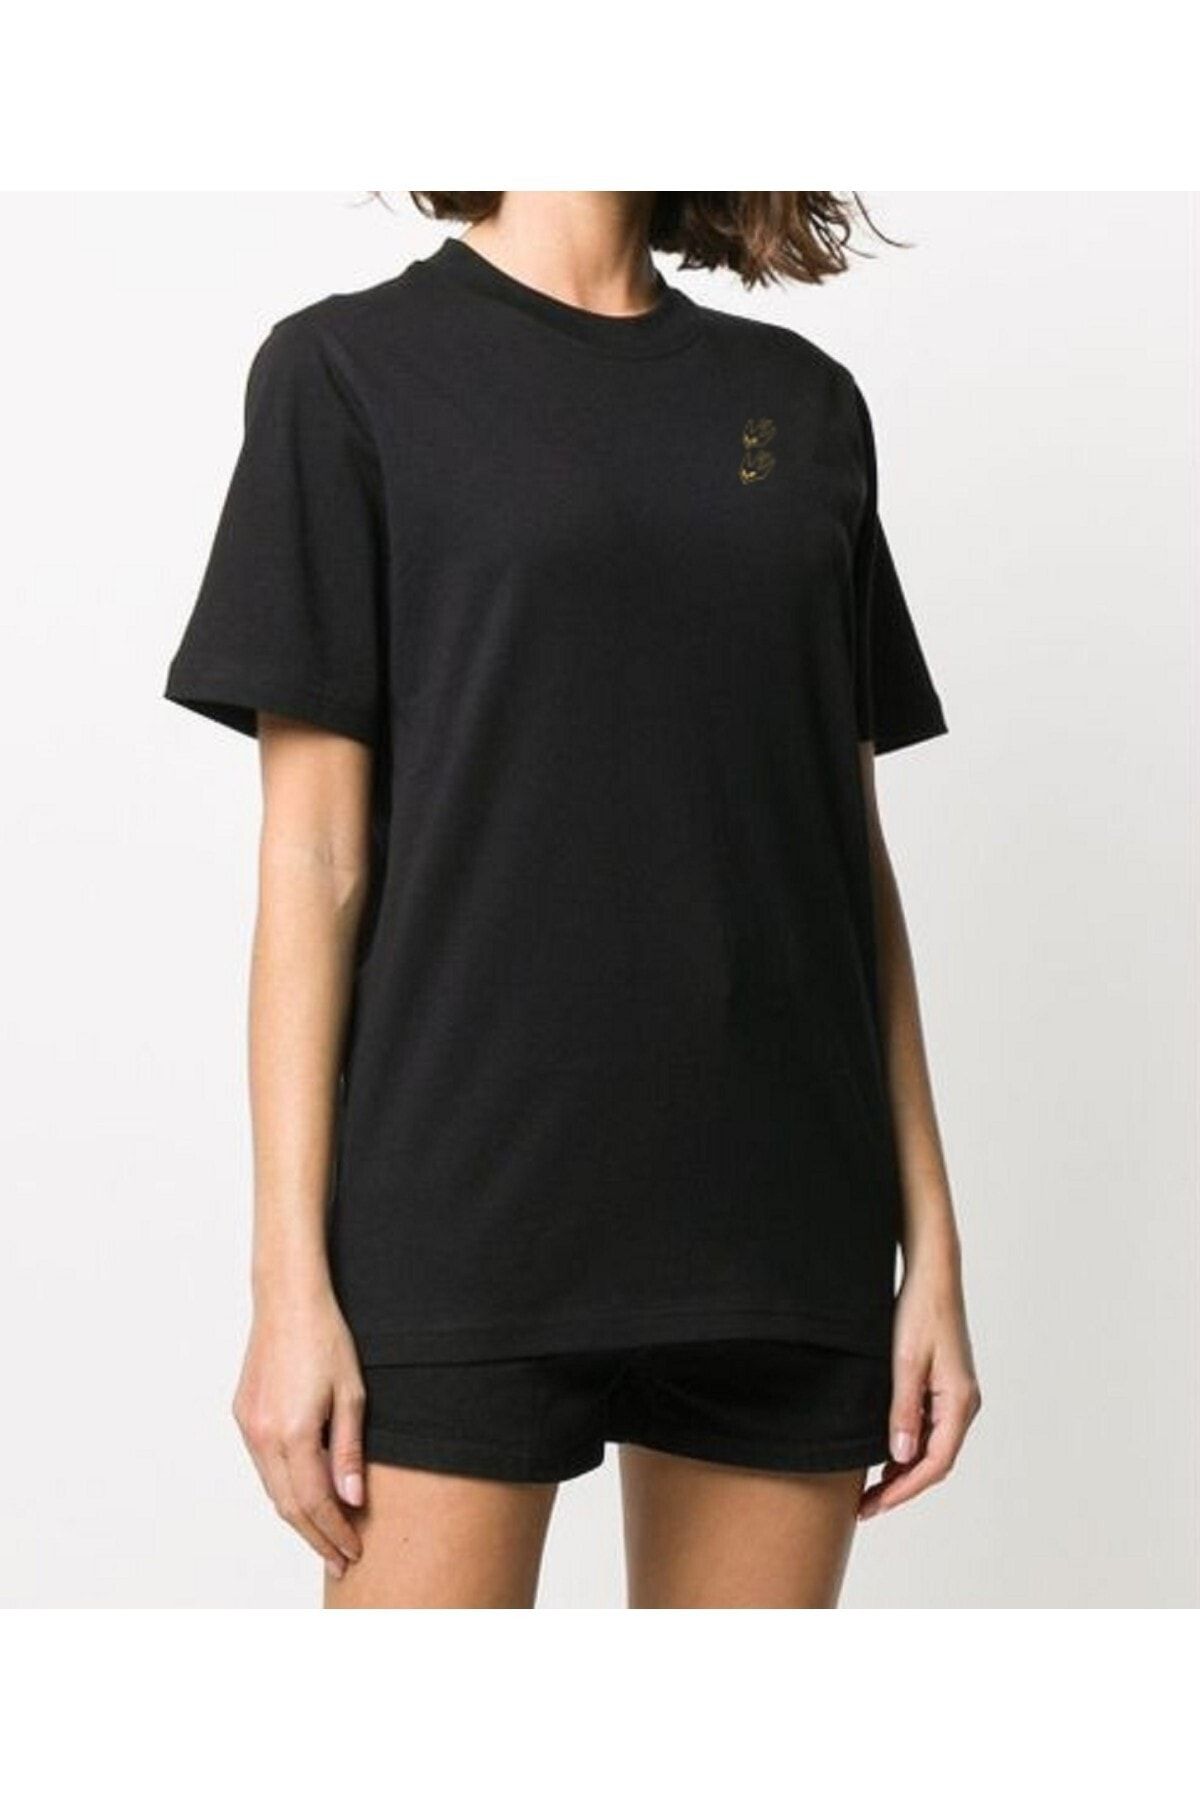 ALEXANDER MCQUEEN Mcq Siyah Kadın Çift Kırlangıç Nakışlı T-shirt